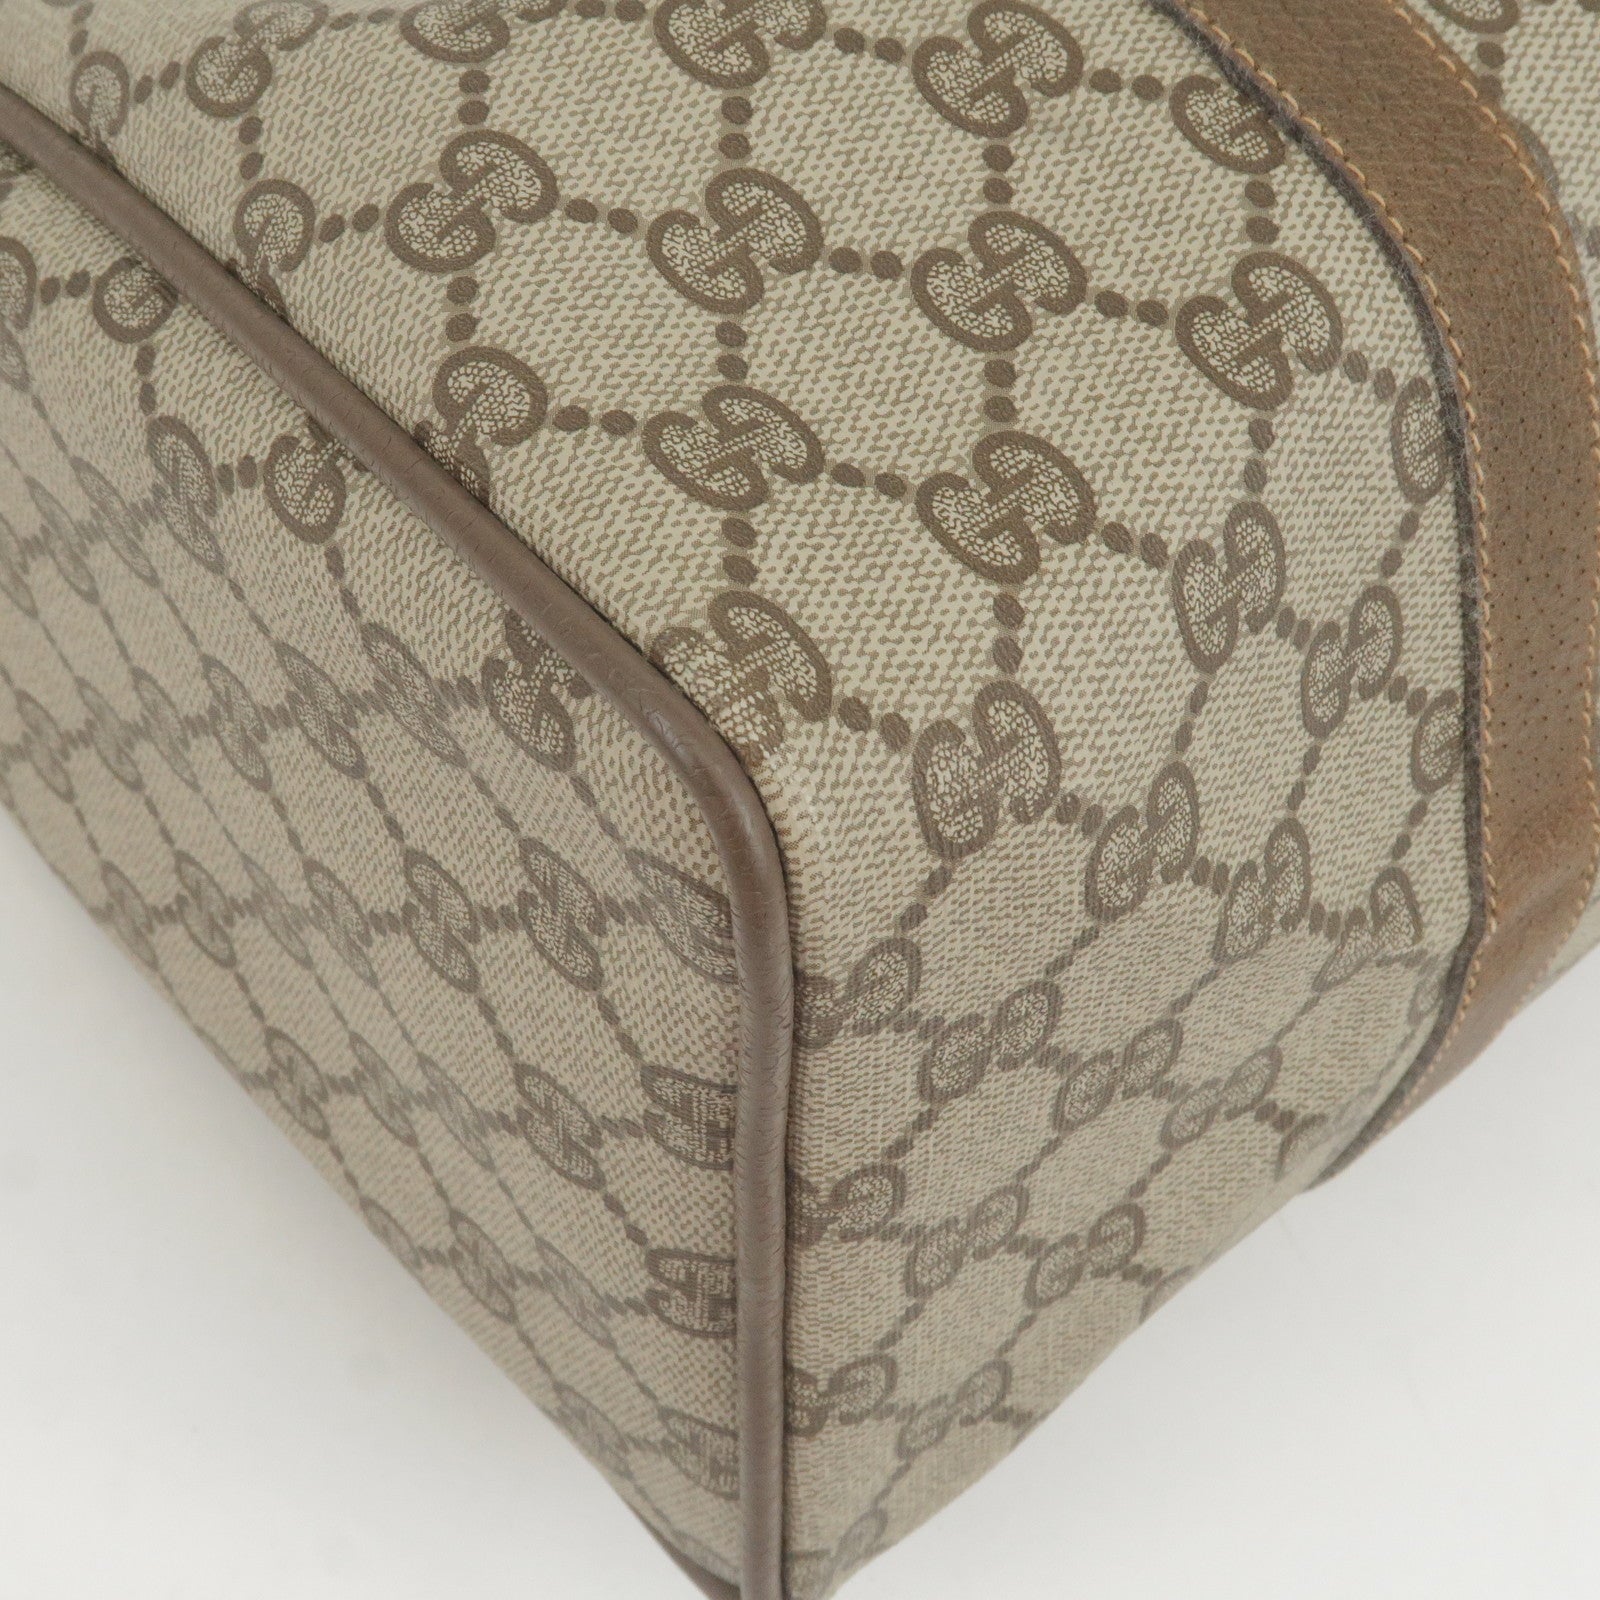 Boston leather handbag Gucci Grey in Leather - 36012935